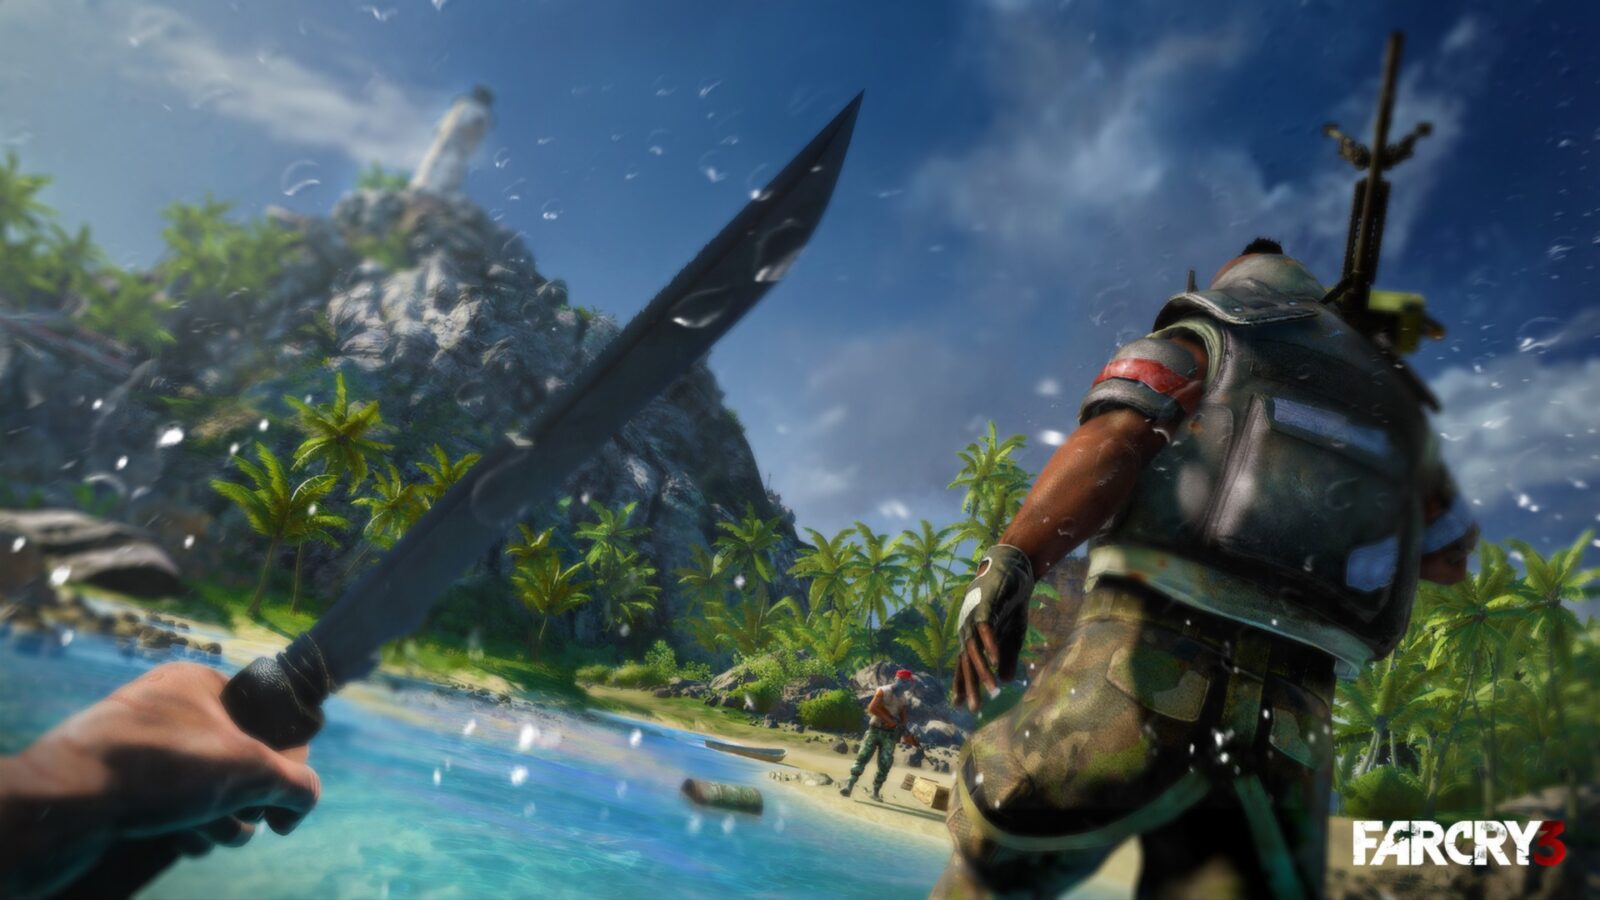 Ubisoft Bagikan Game Far Cry 3 Versi PC Secara Gratis